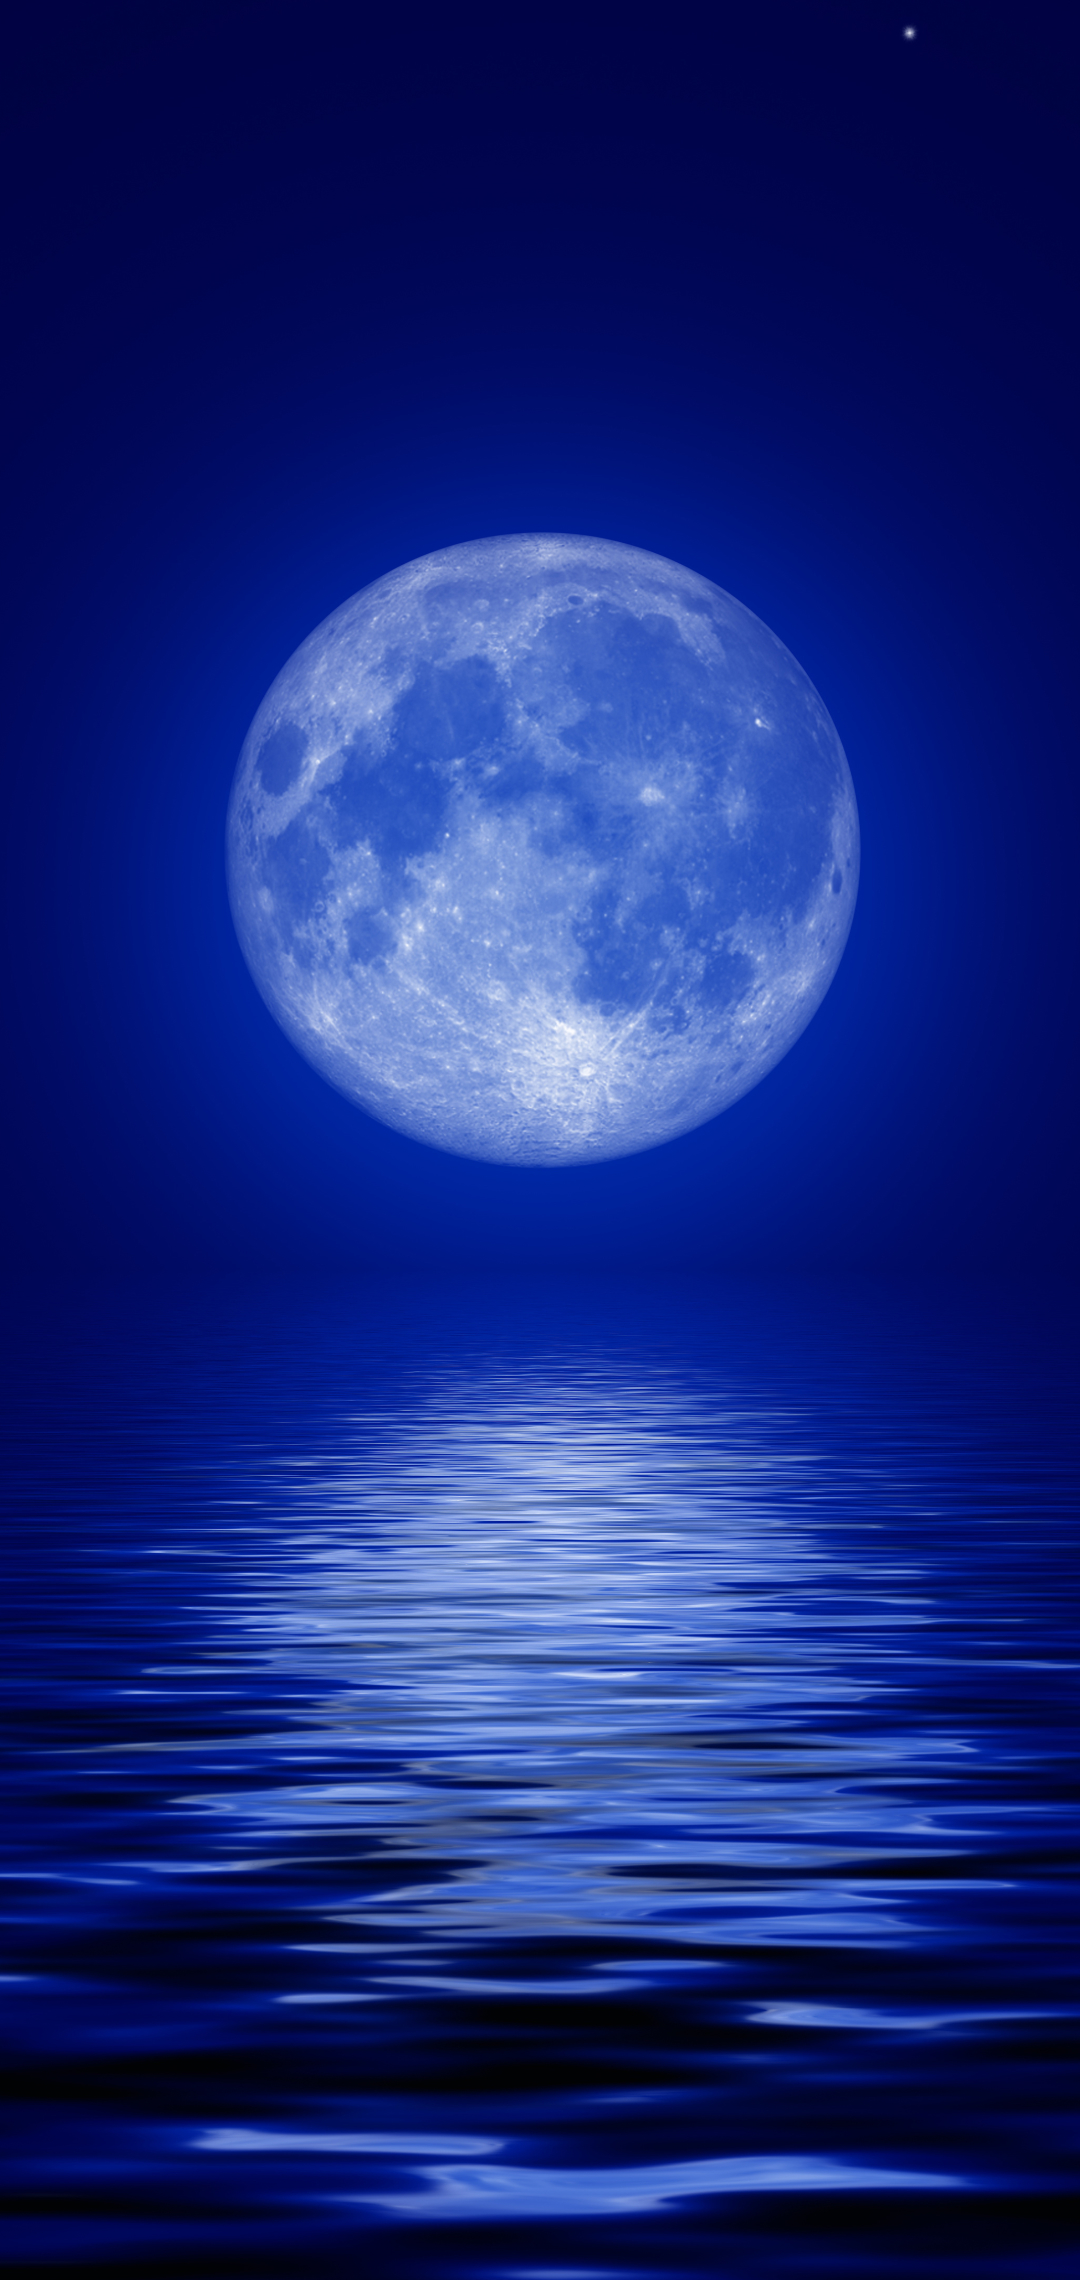 Full Moon over the Sea